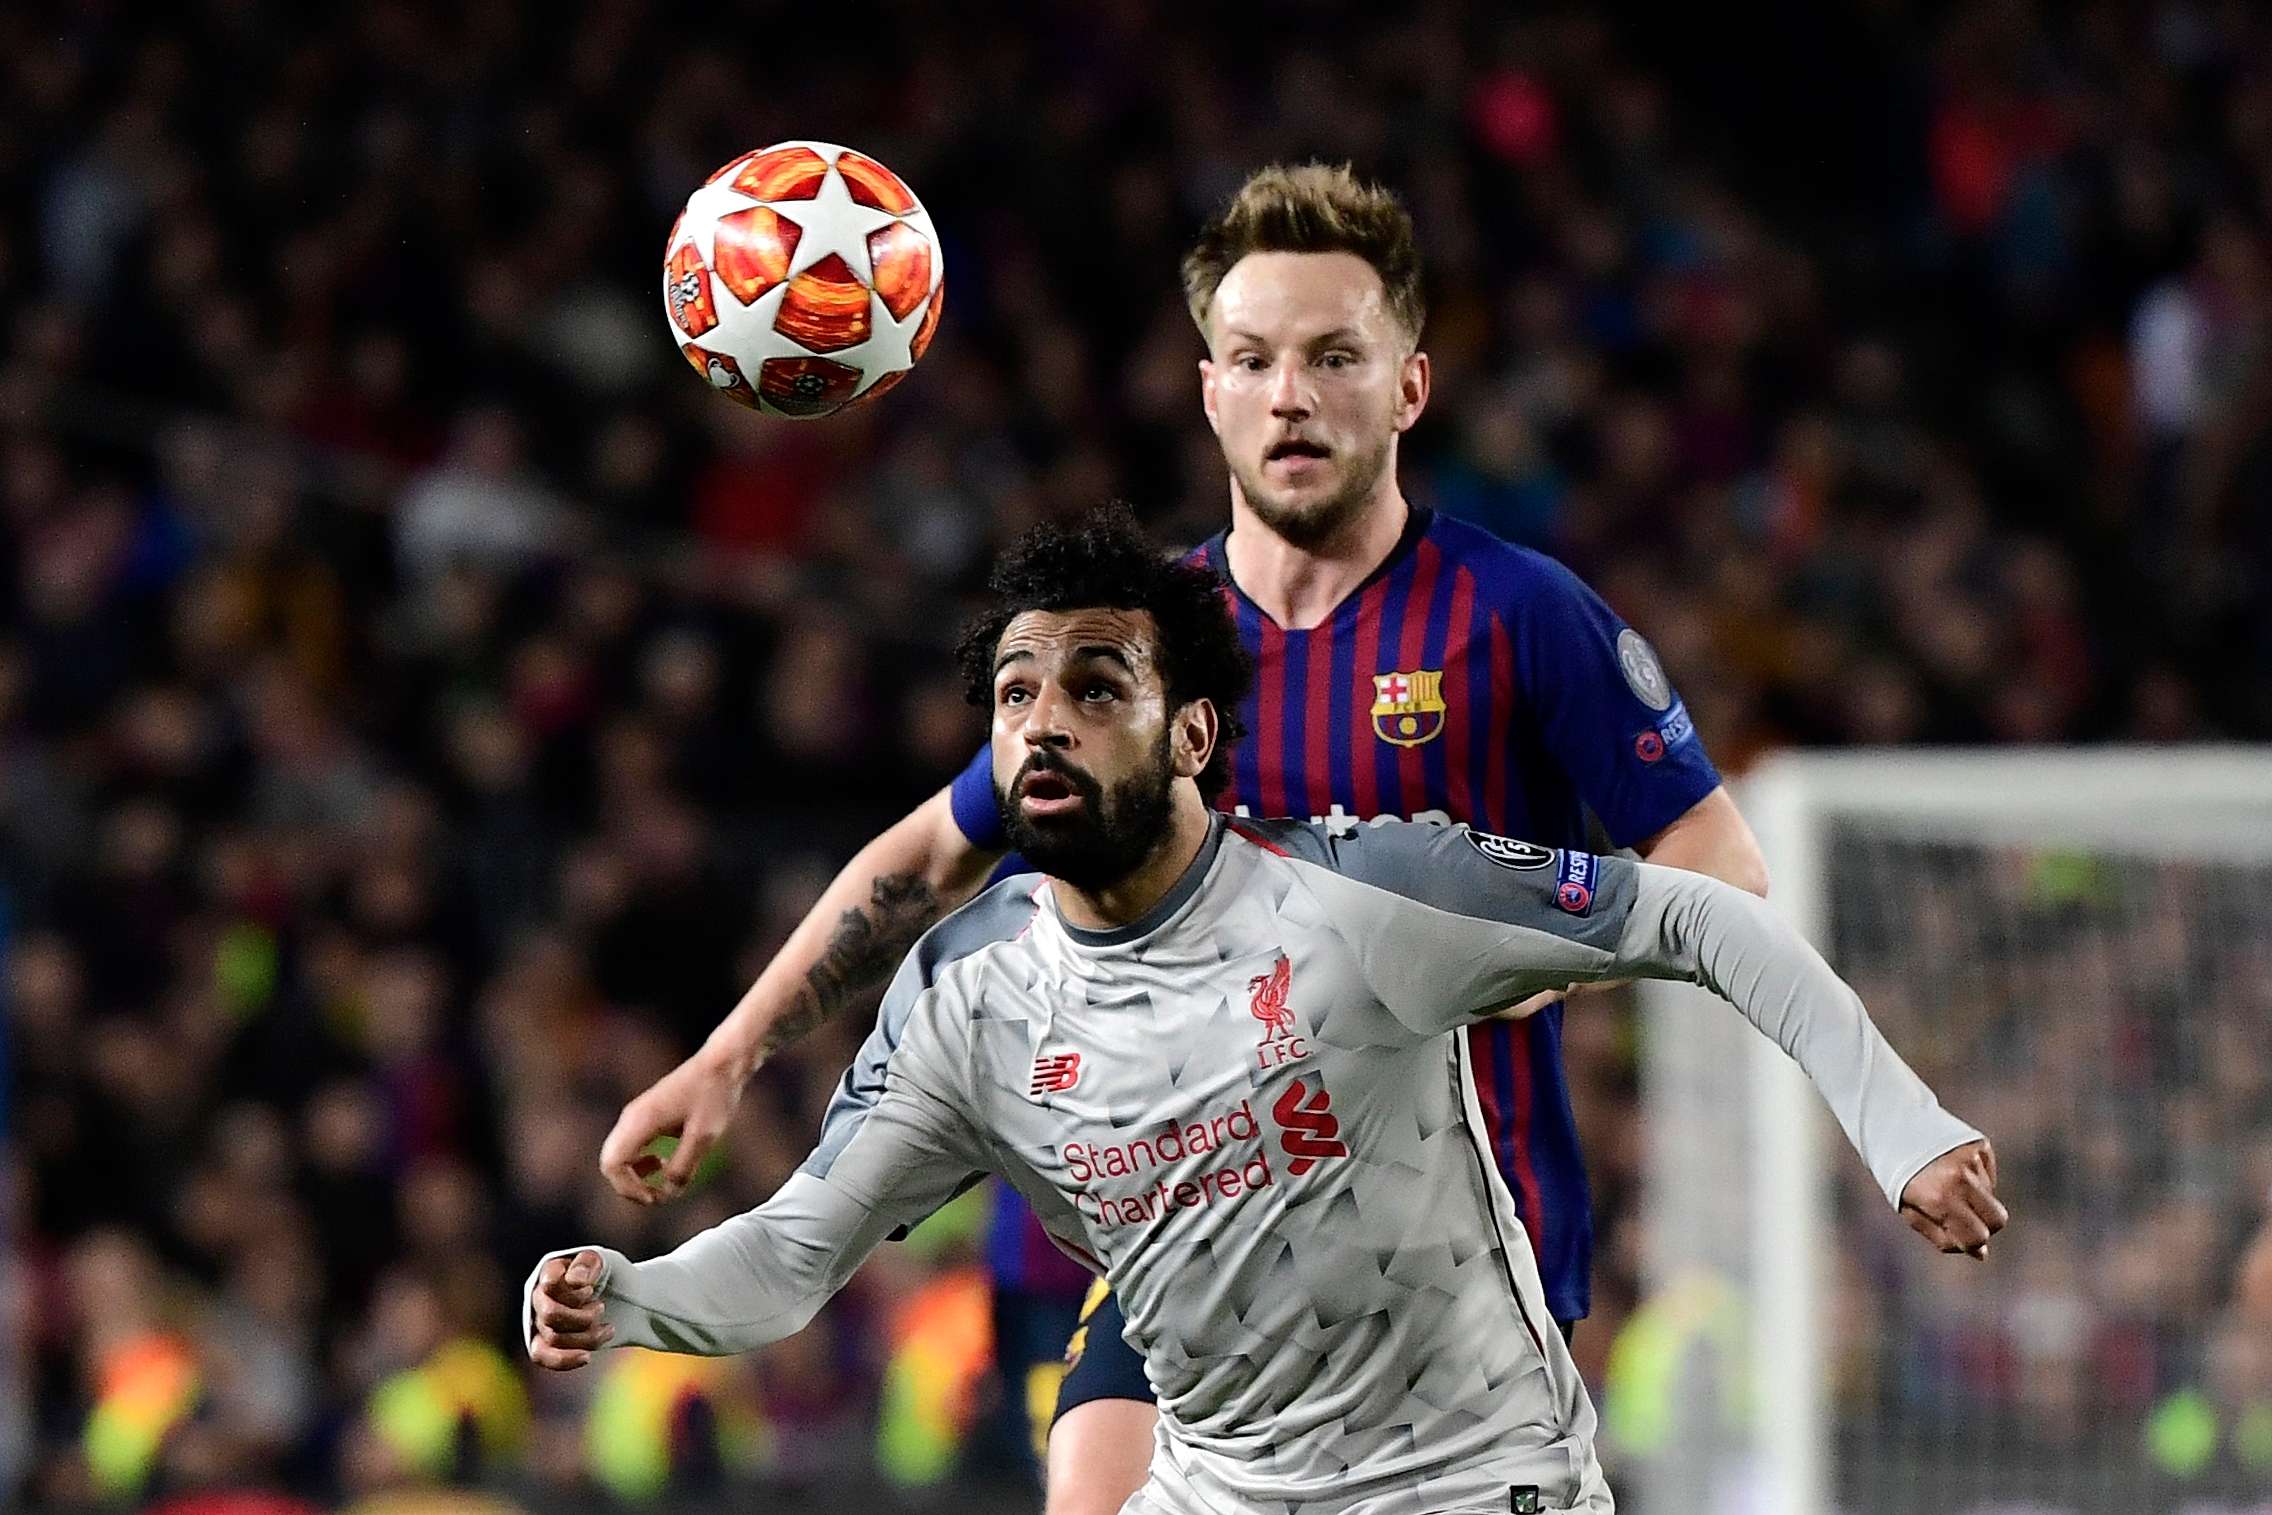 Mohamed Salah Ivan Rakitic Barcelona Liverpool UEFA Champions League semi final 2018-19